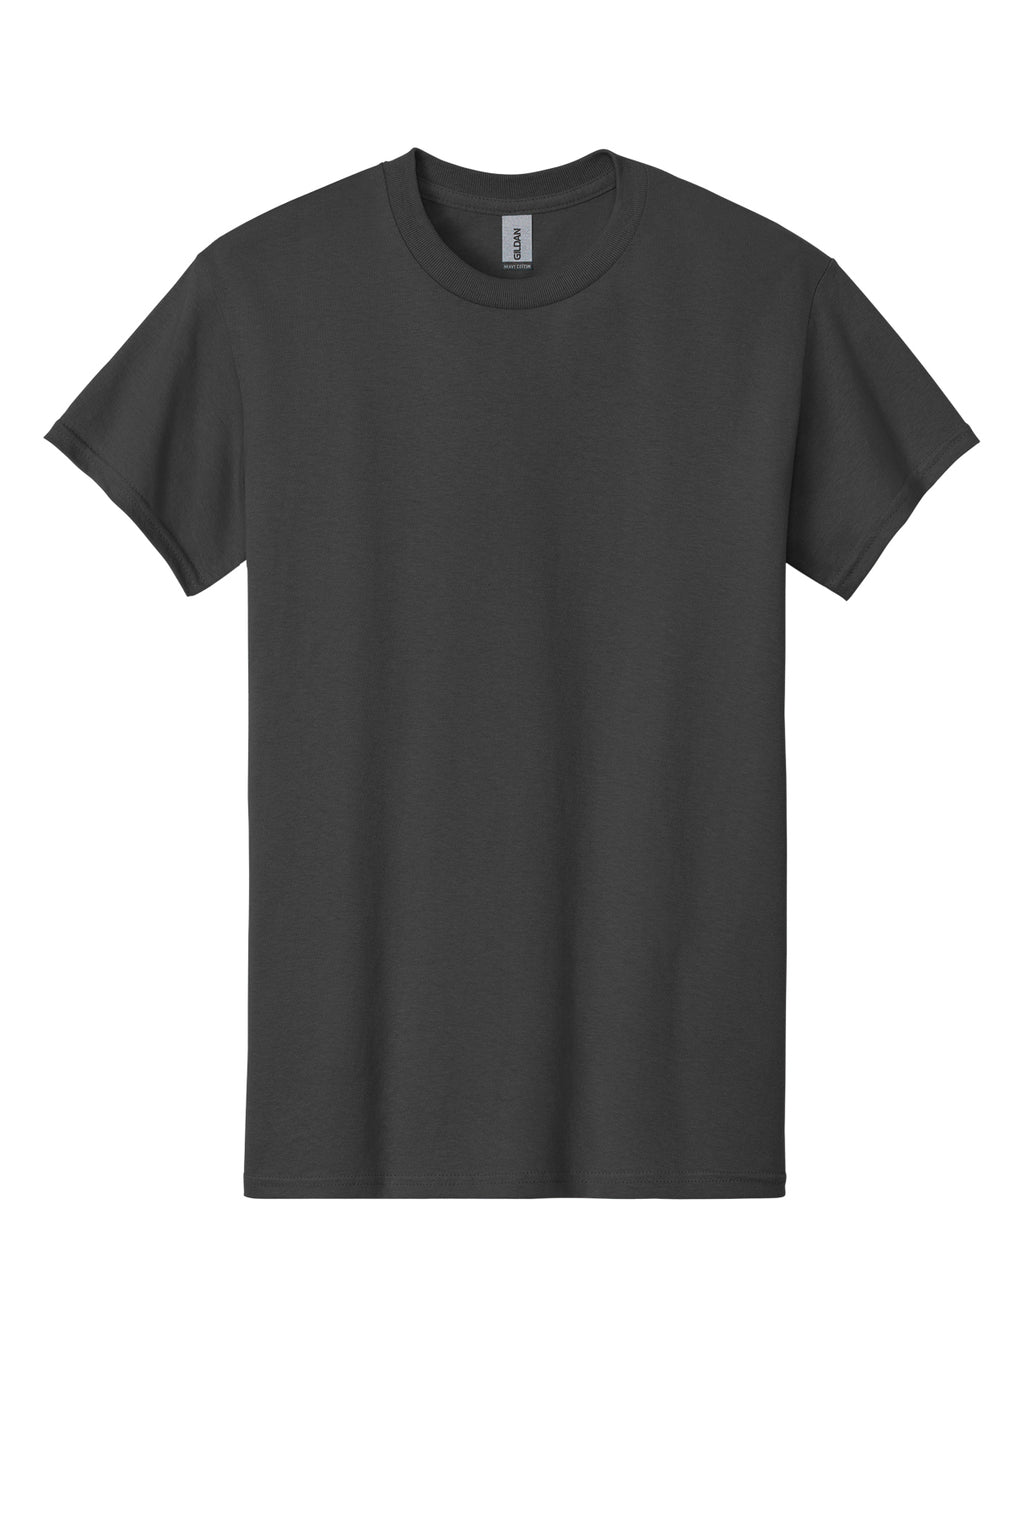 Gildan Mens/Unisex S/S Shirts Charcoal